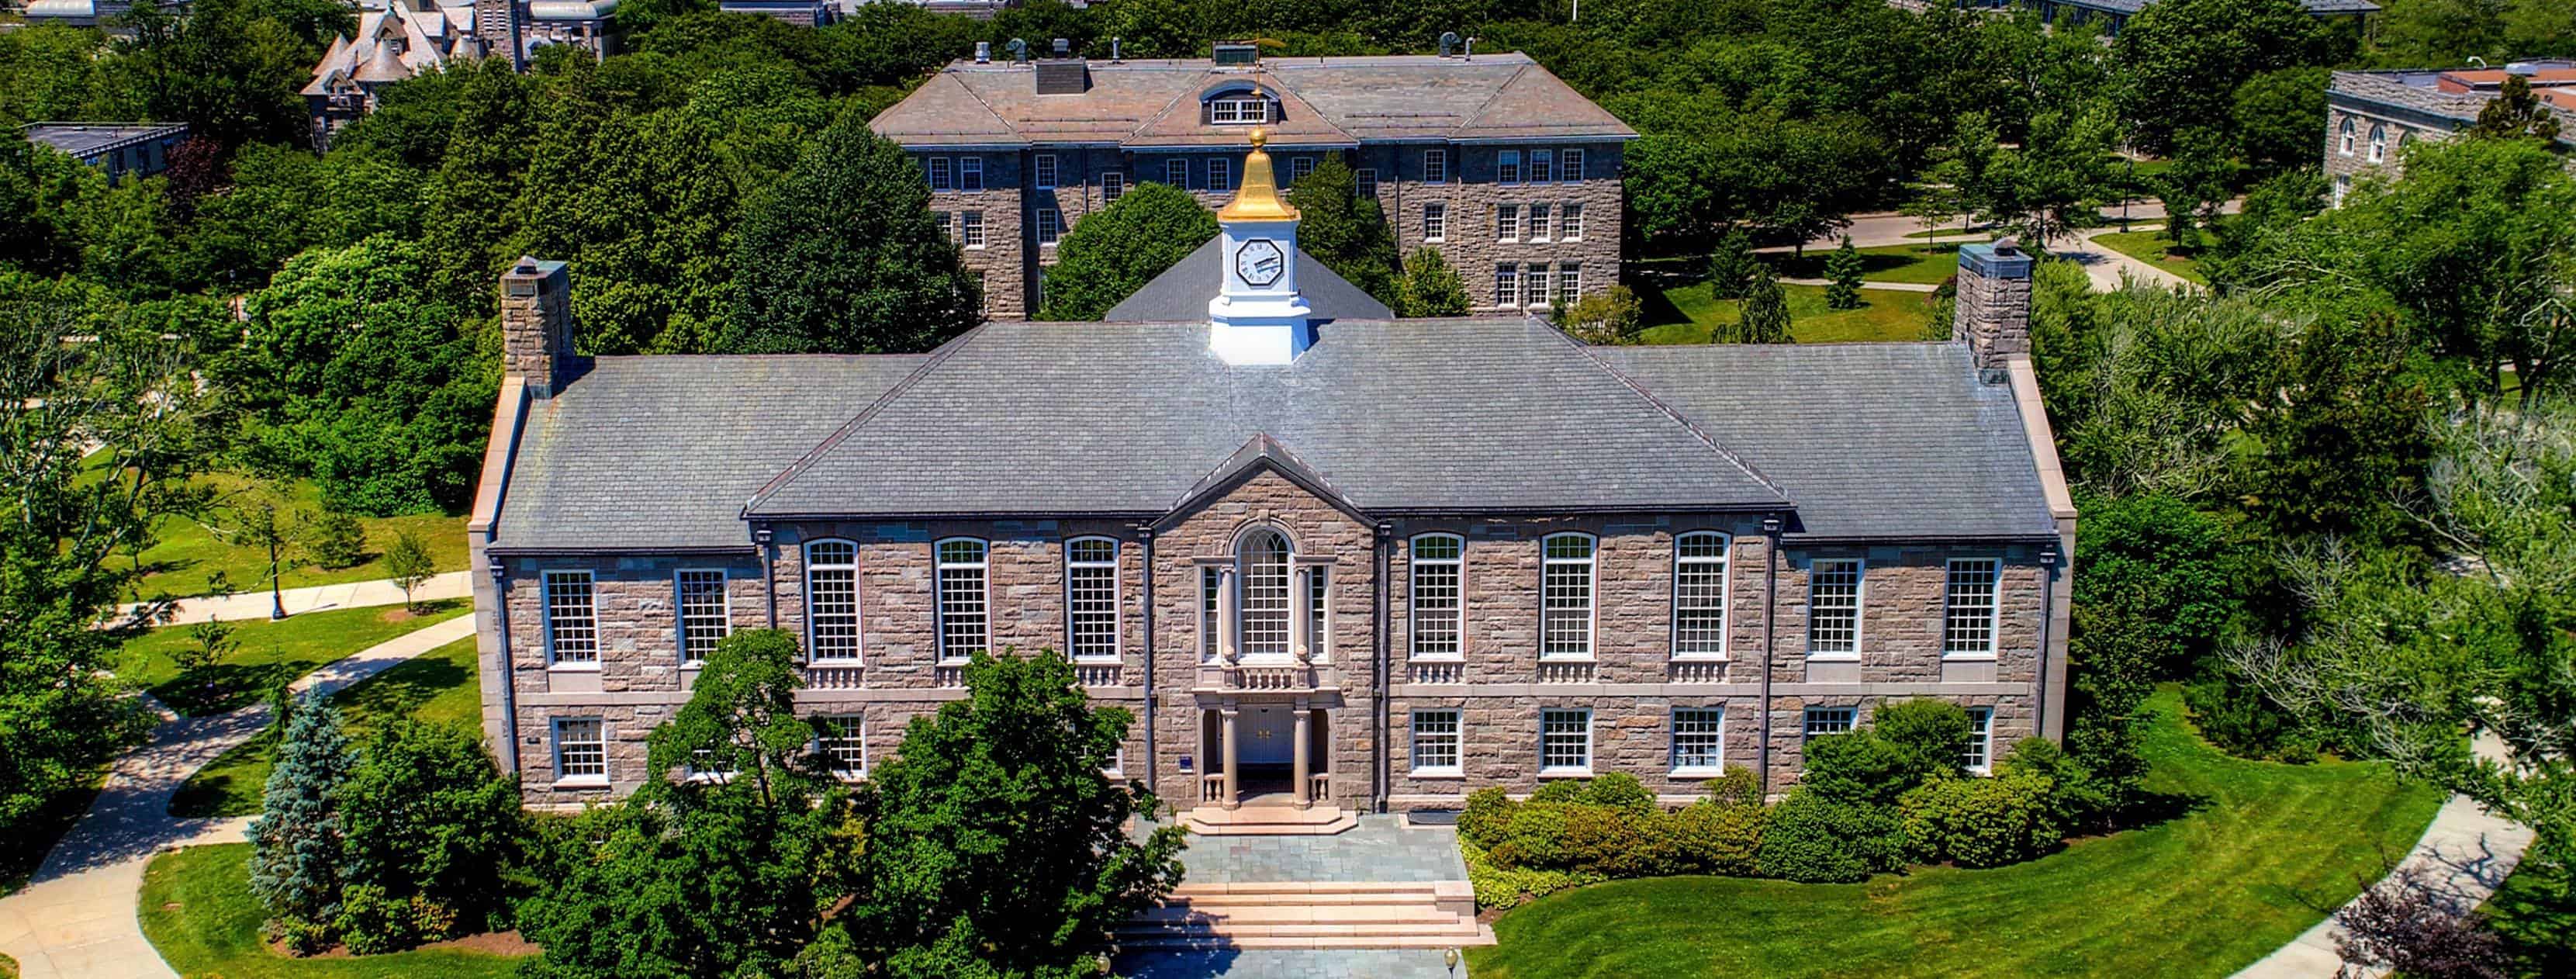 University of Rhode Island | Traditional School